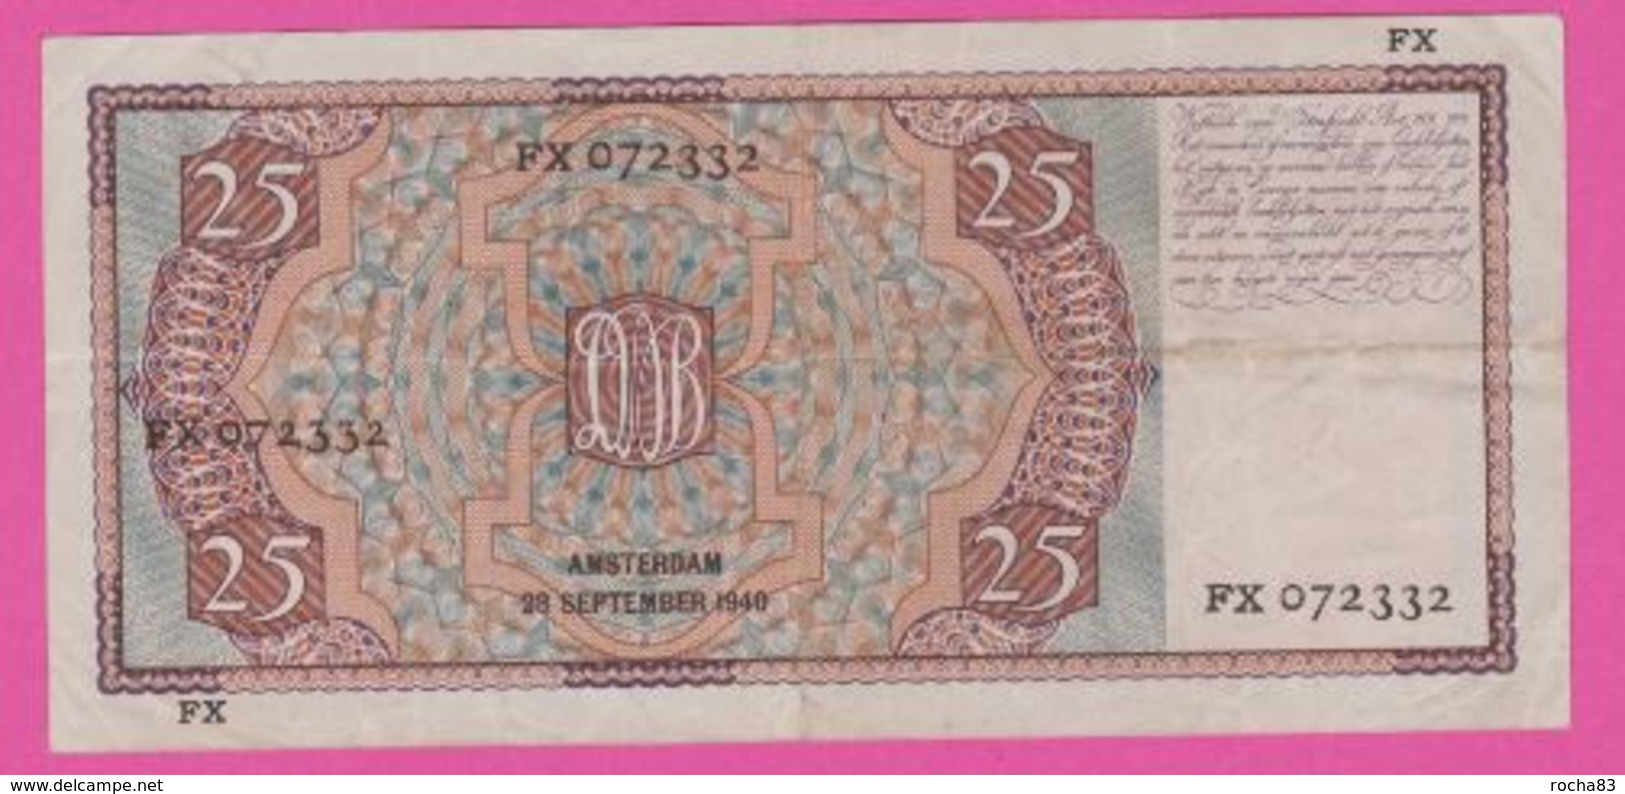 NETHERLANDS - PAYS BAS - 25 Gulden Du 28 09 1940  - Pick 50 TB+ - 25 Gulden